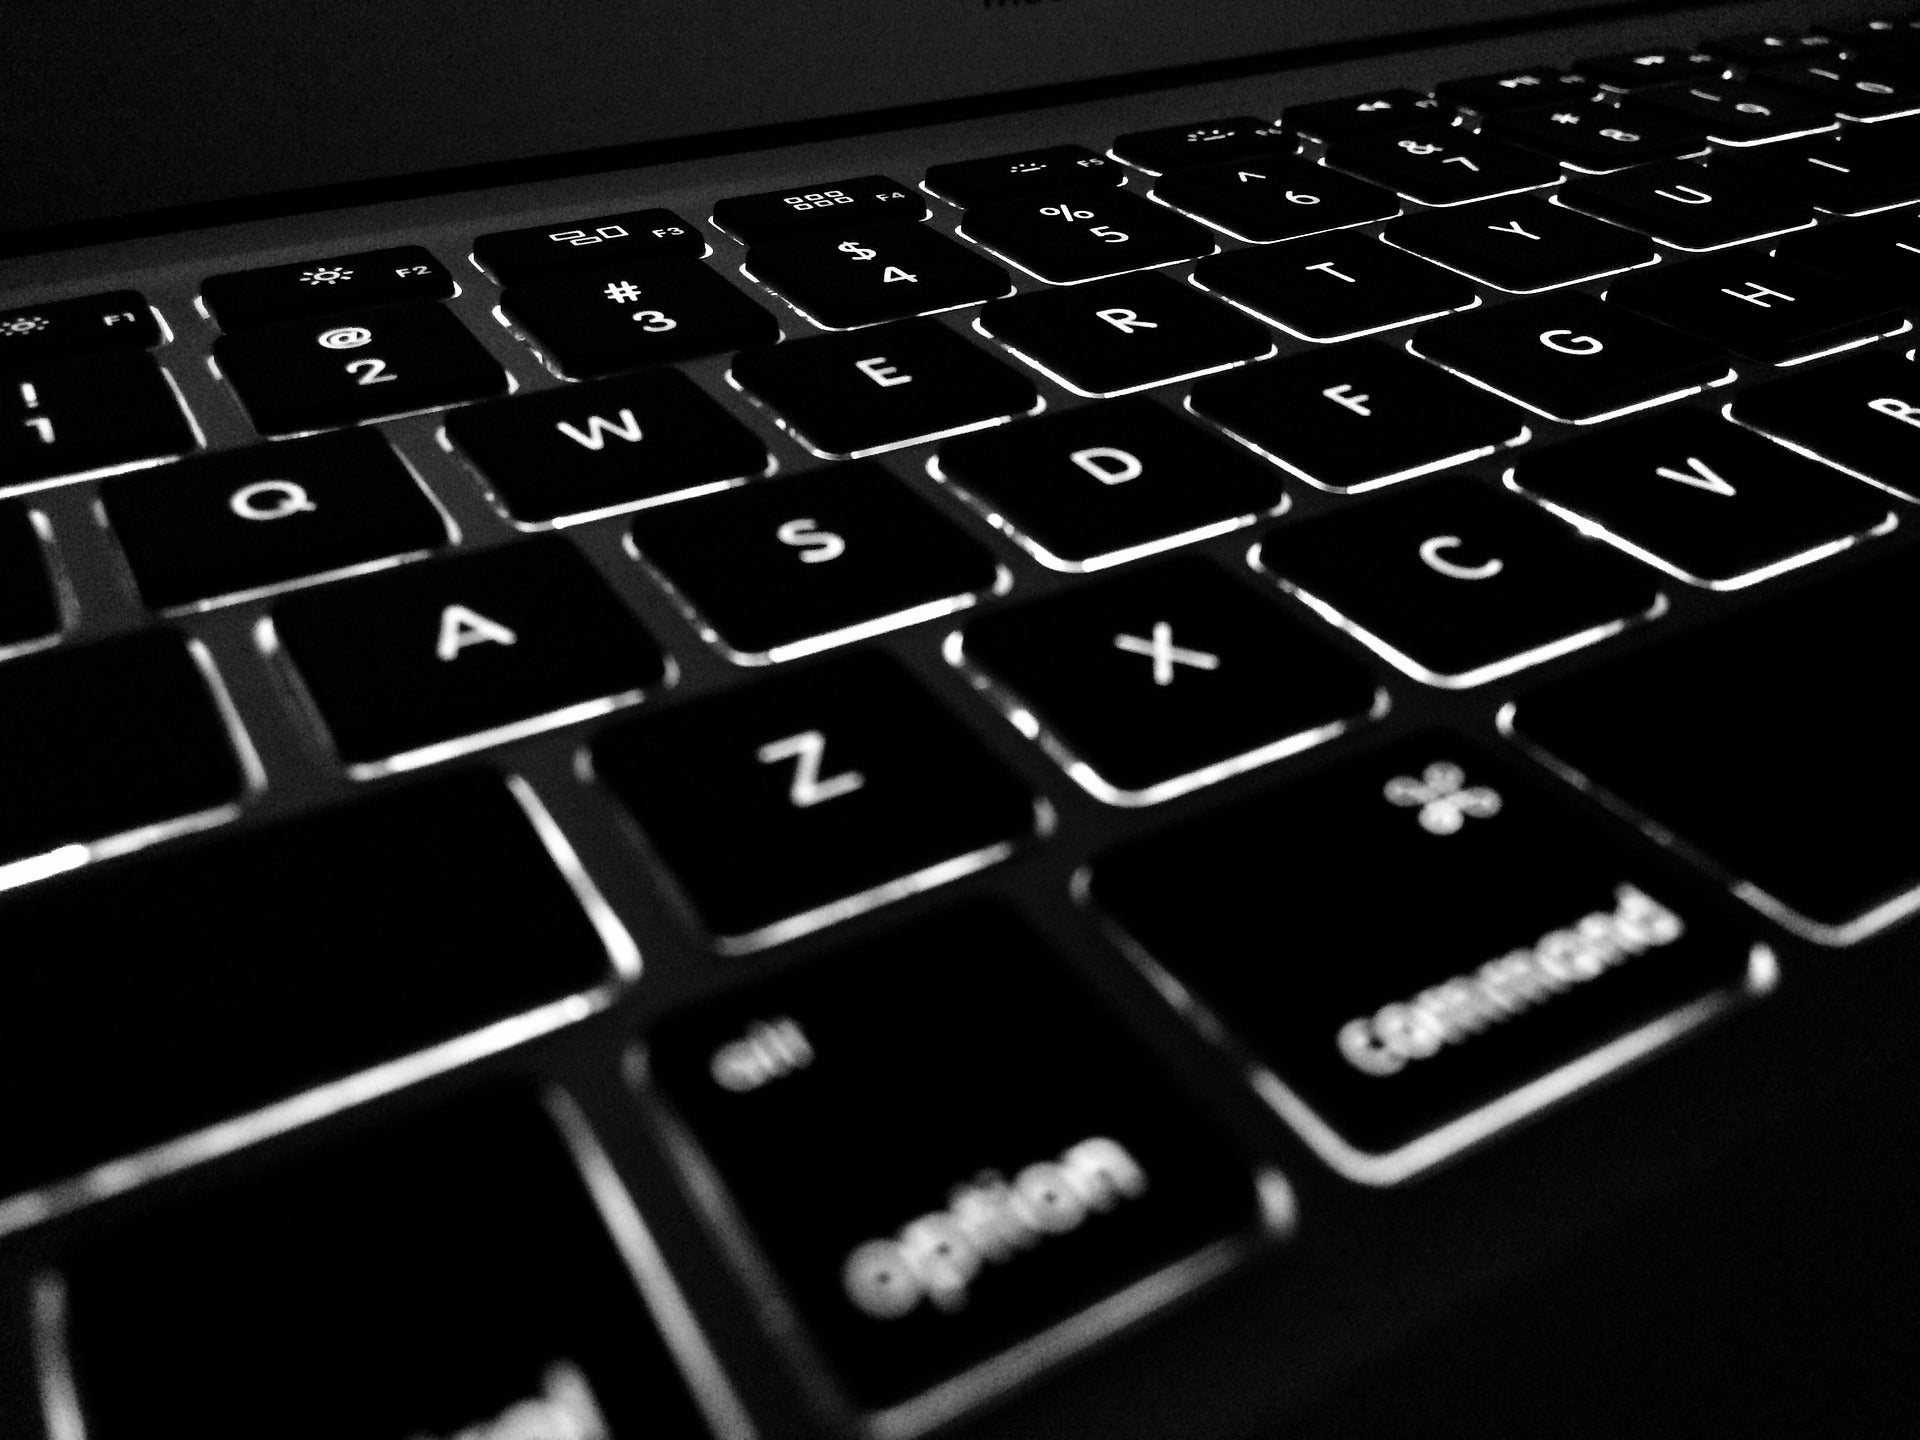 Closeup photograph of a backlit black laptop keyboard